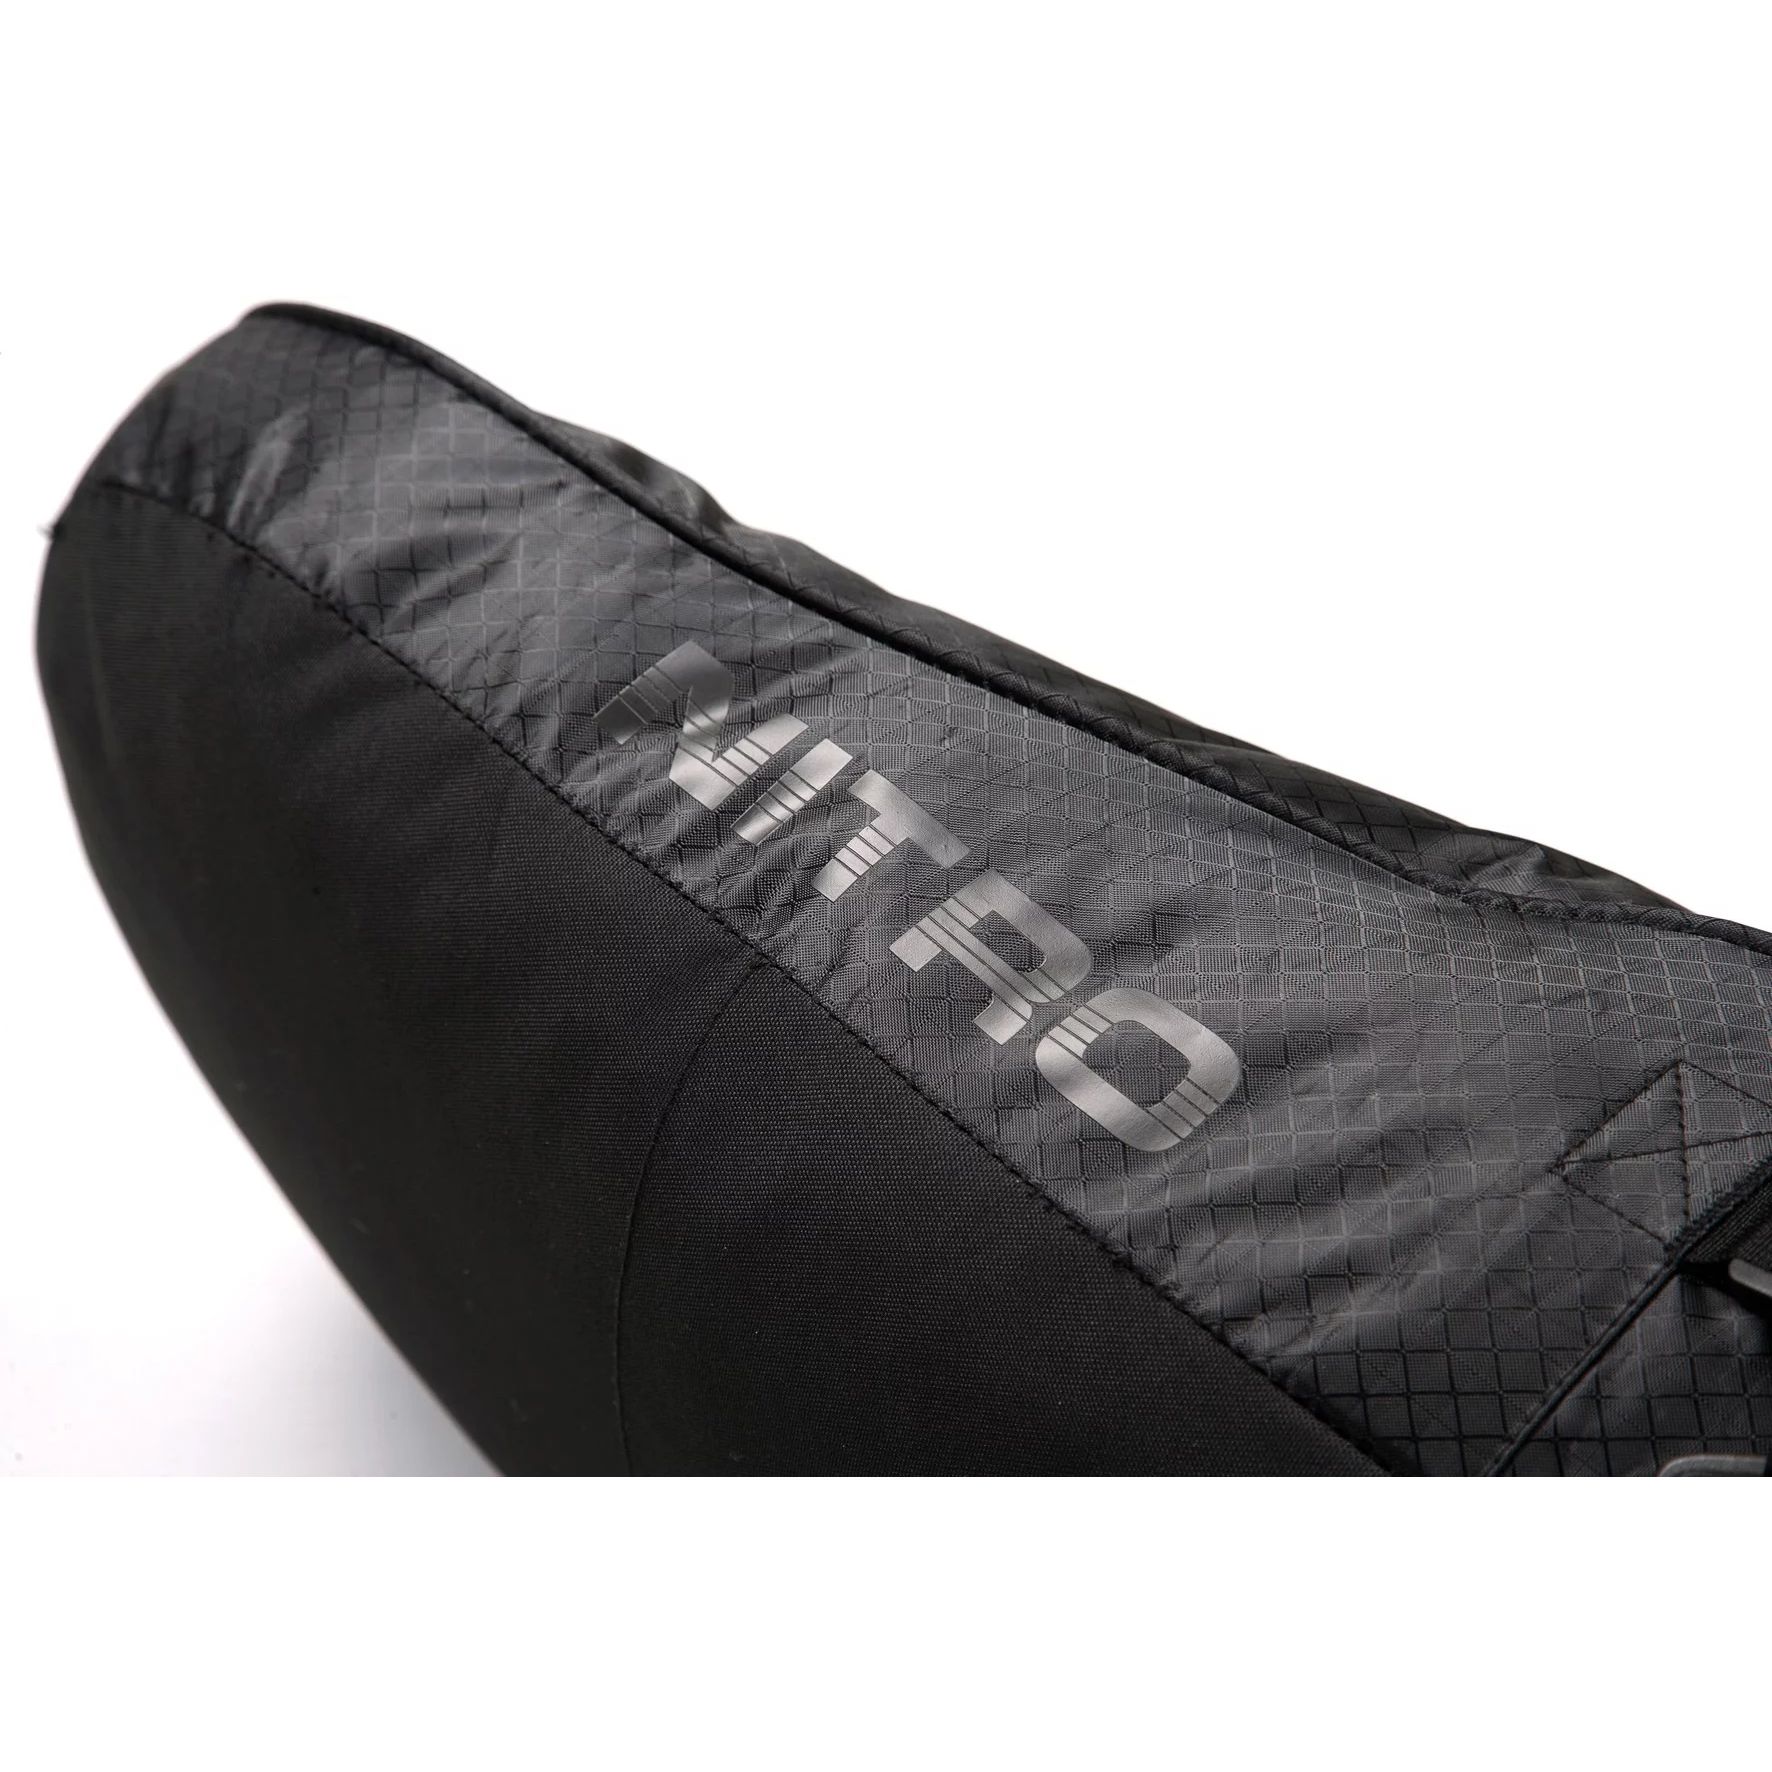 Ski & Snowb Bags -  nitro Sub Board Bag 165